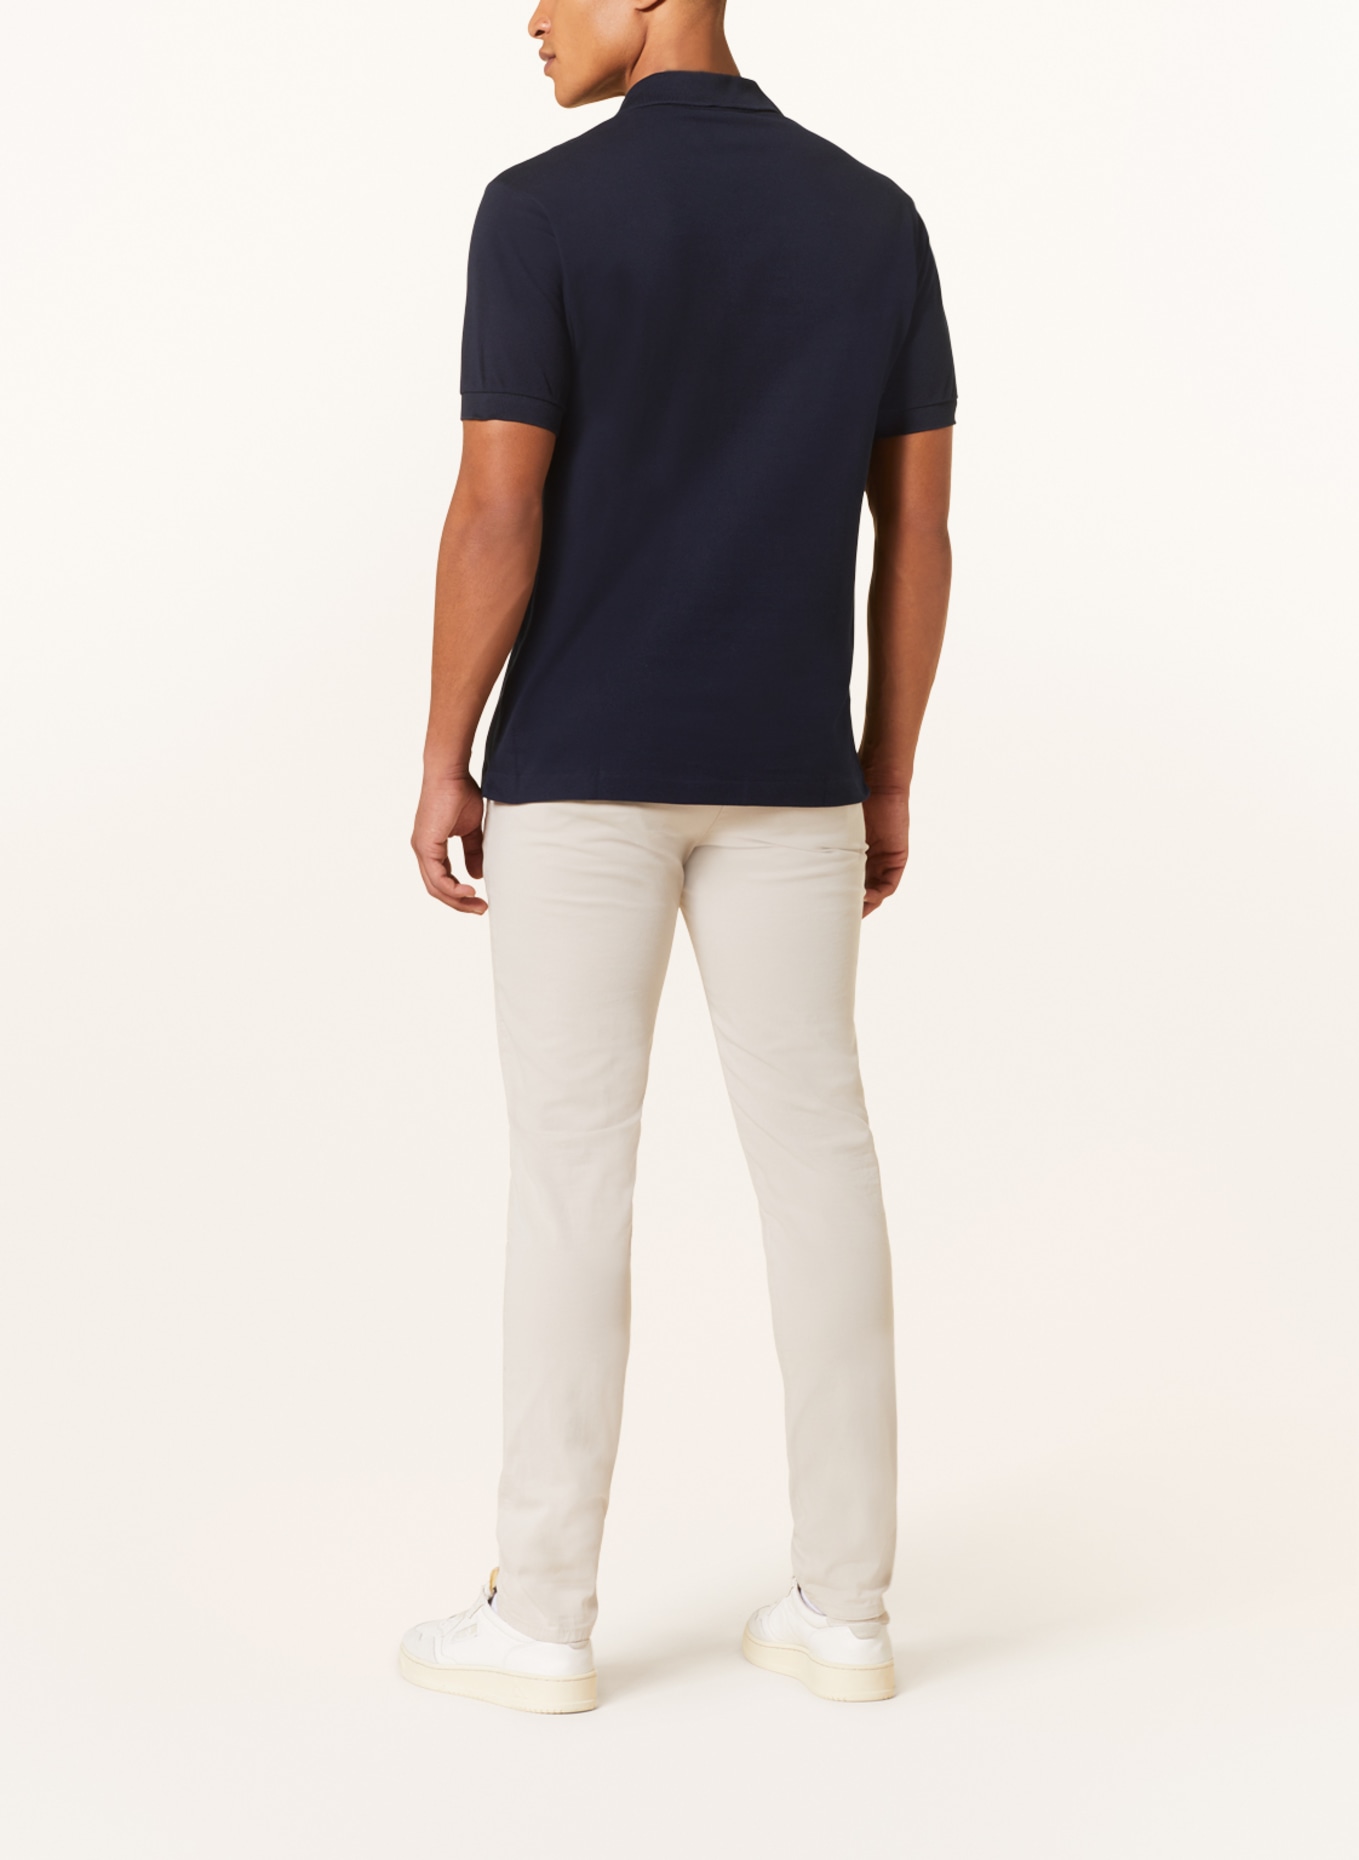 LACOSTE Piqué-Poloshirt Classic Fit, Farbe: 166 NAVY BLUE (Bild 3)